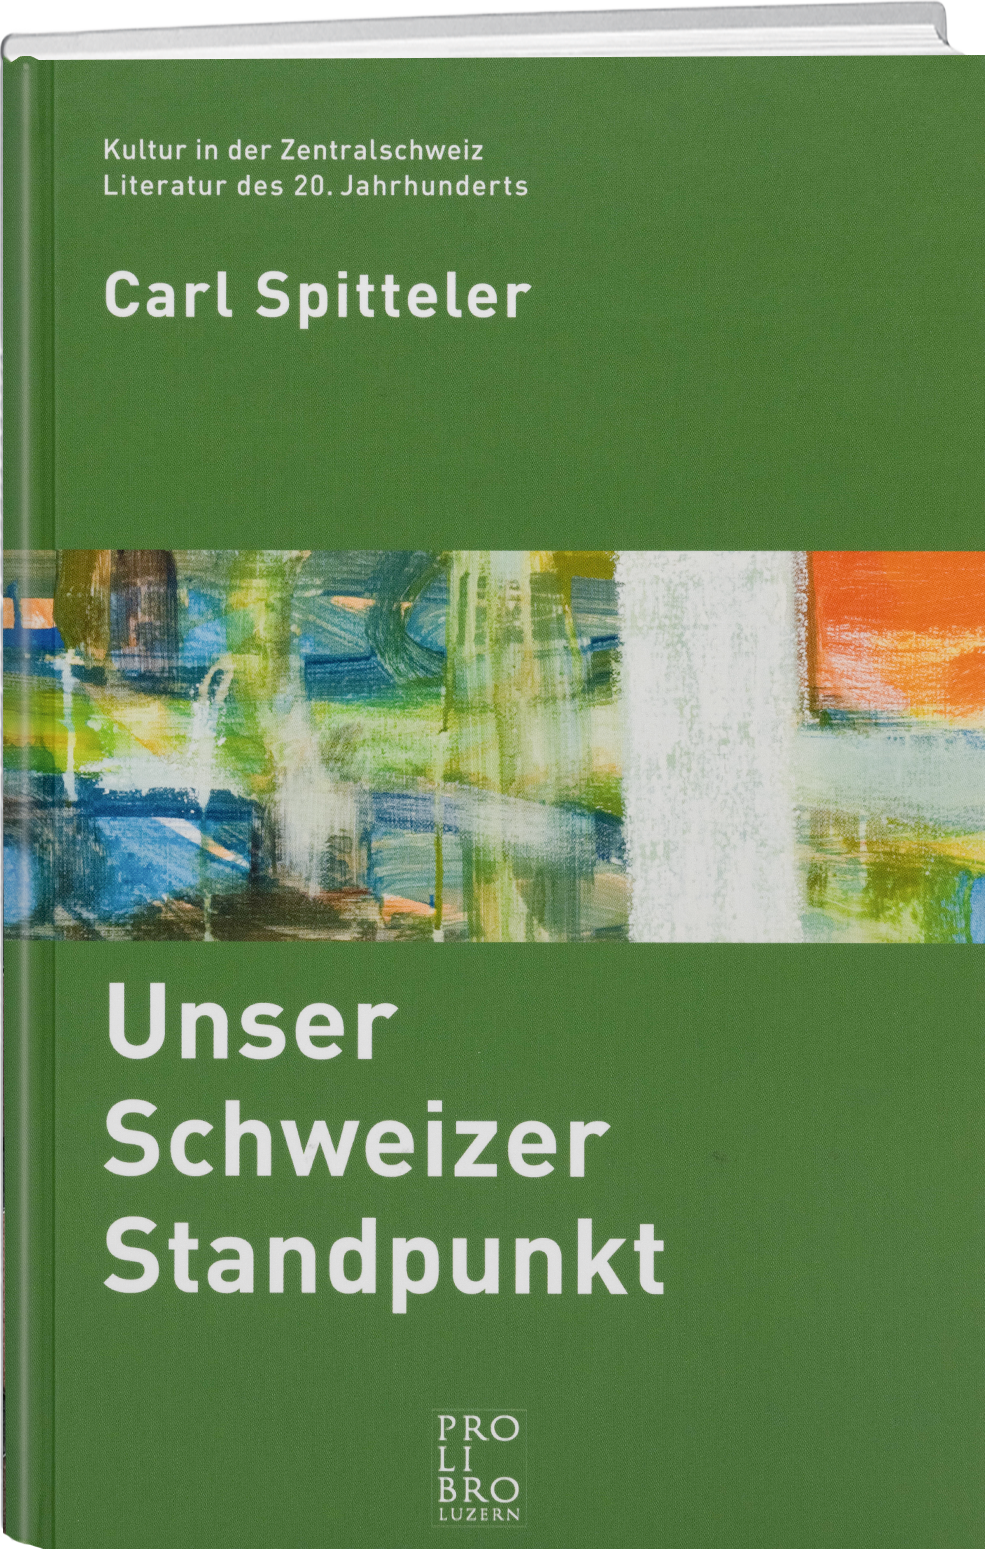 Carl Spitteler: Unser Schweizer Standpunkt - prolibro.ch